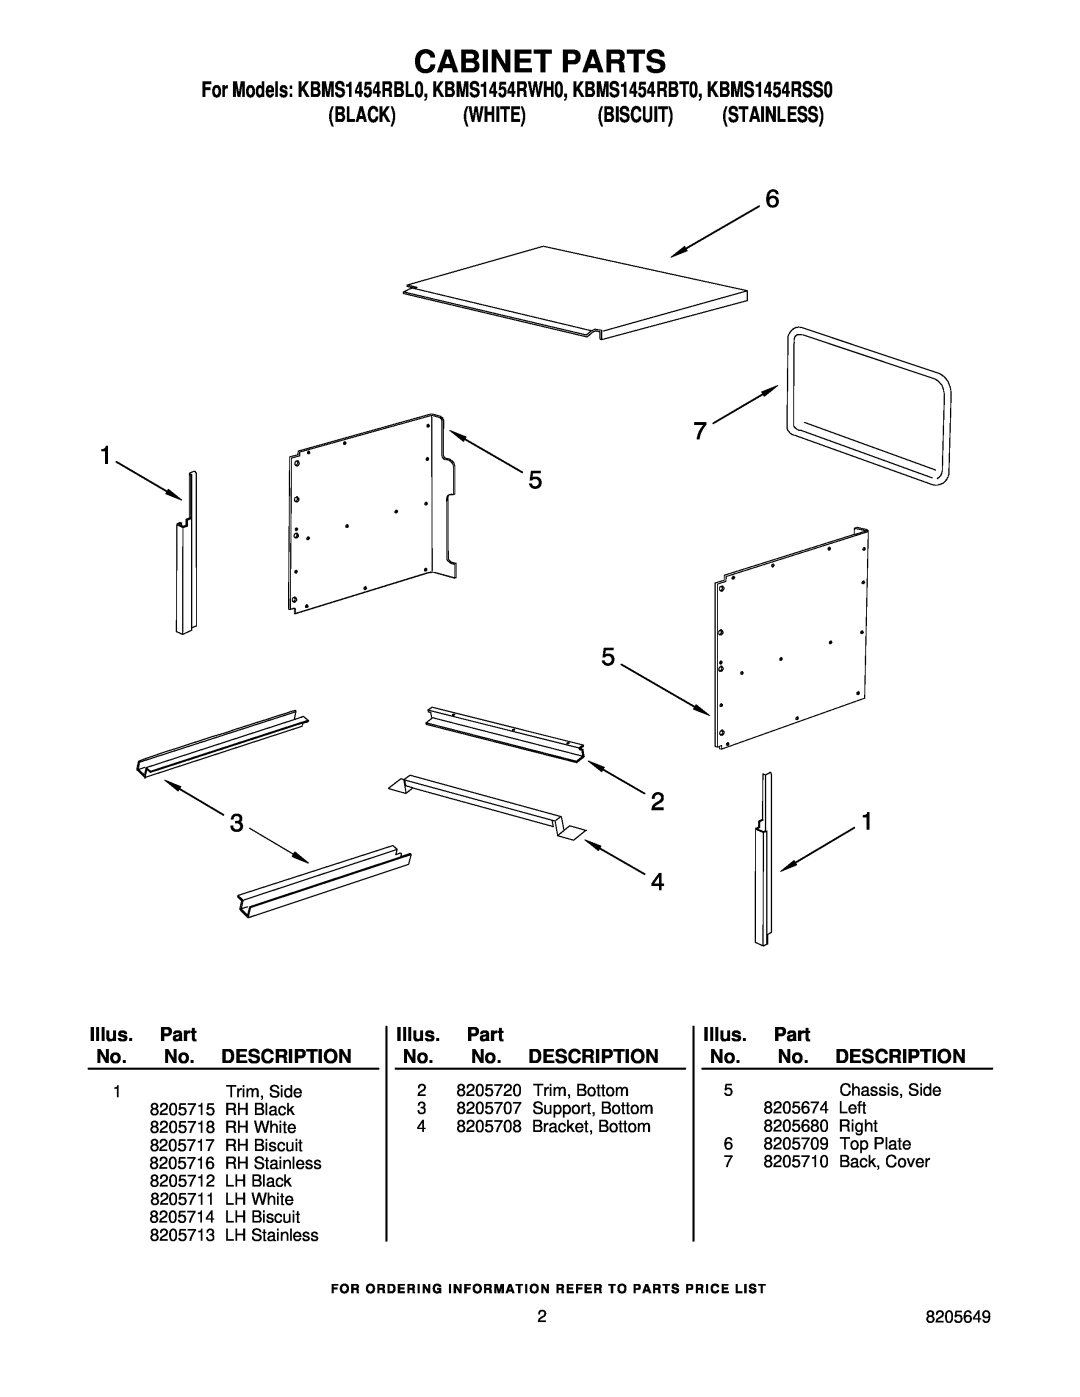 KitchenAid installation instructions Cabinet Parts, For Models KBMS1454RBL0, KBMS1454RWH0, KBMS1454RBT0, KBMS1454RSS0 